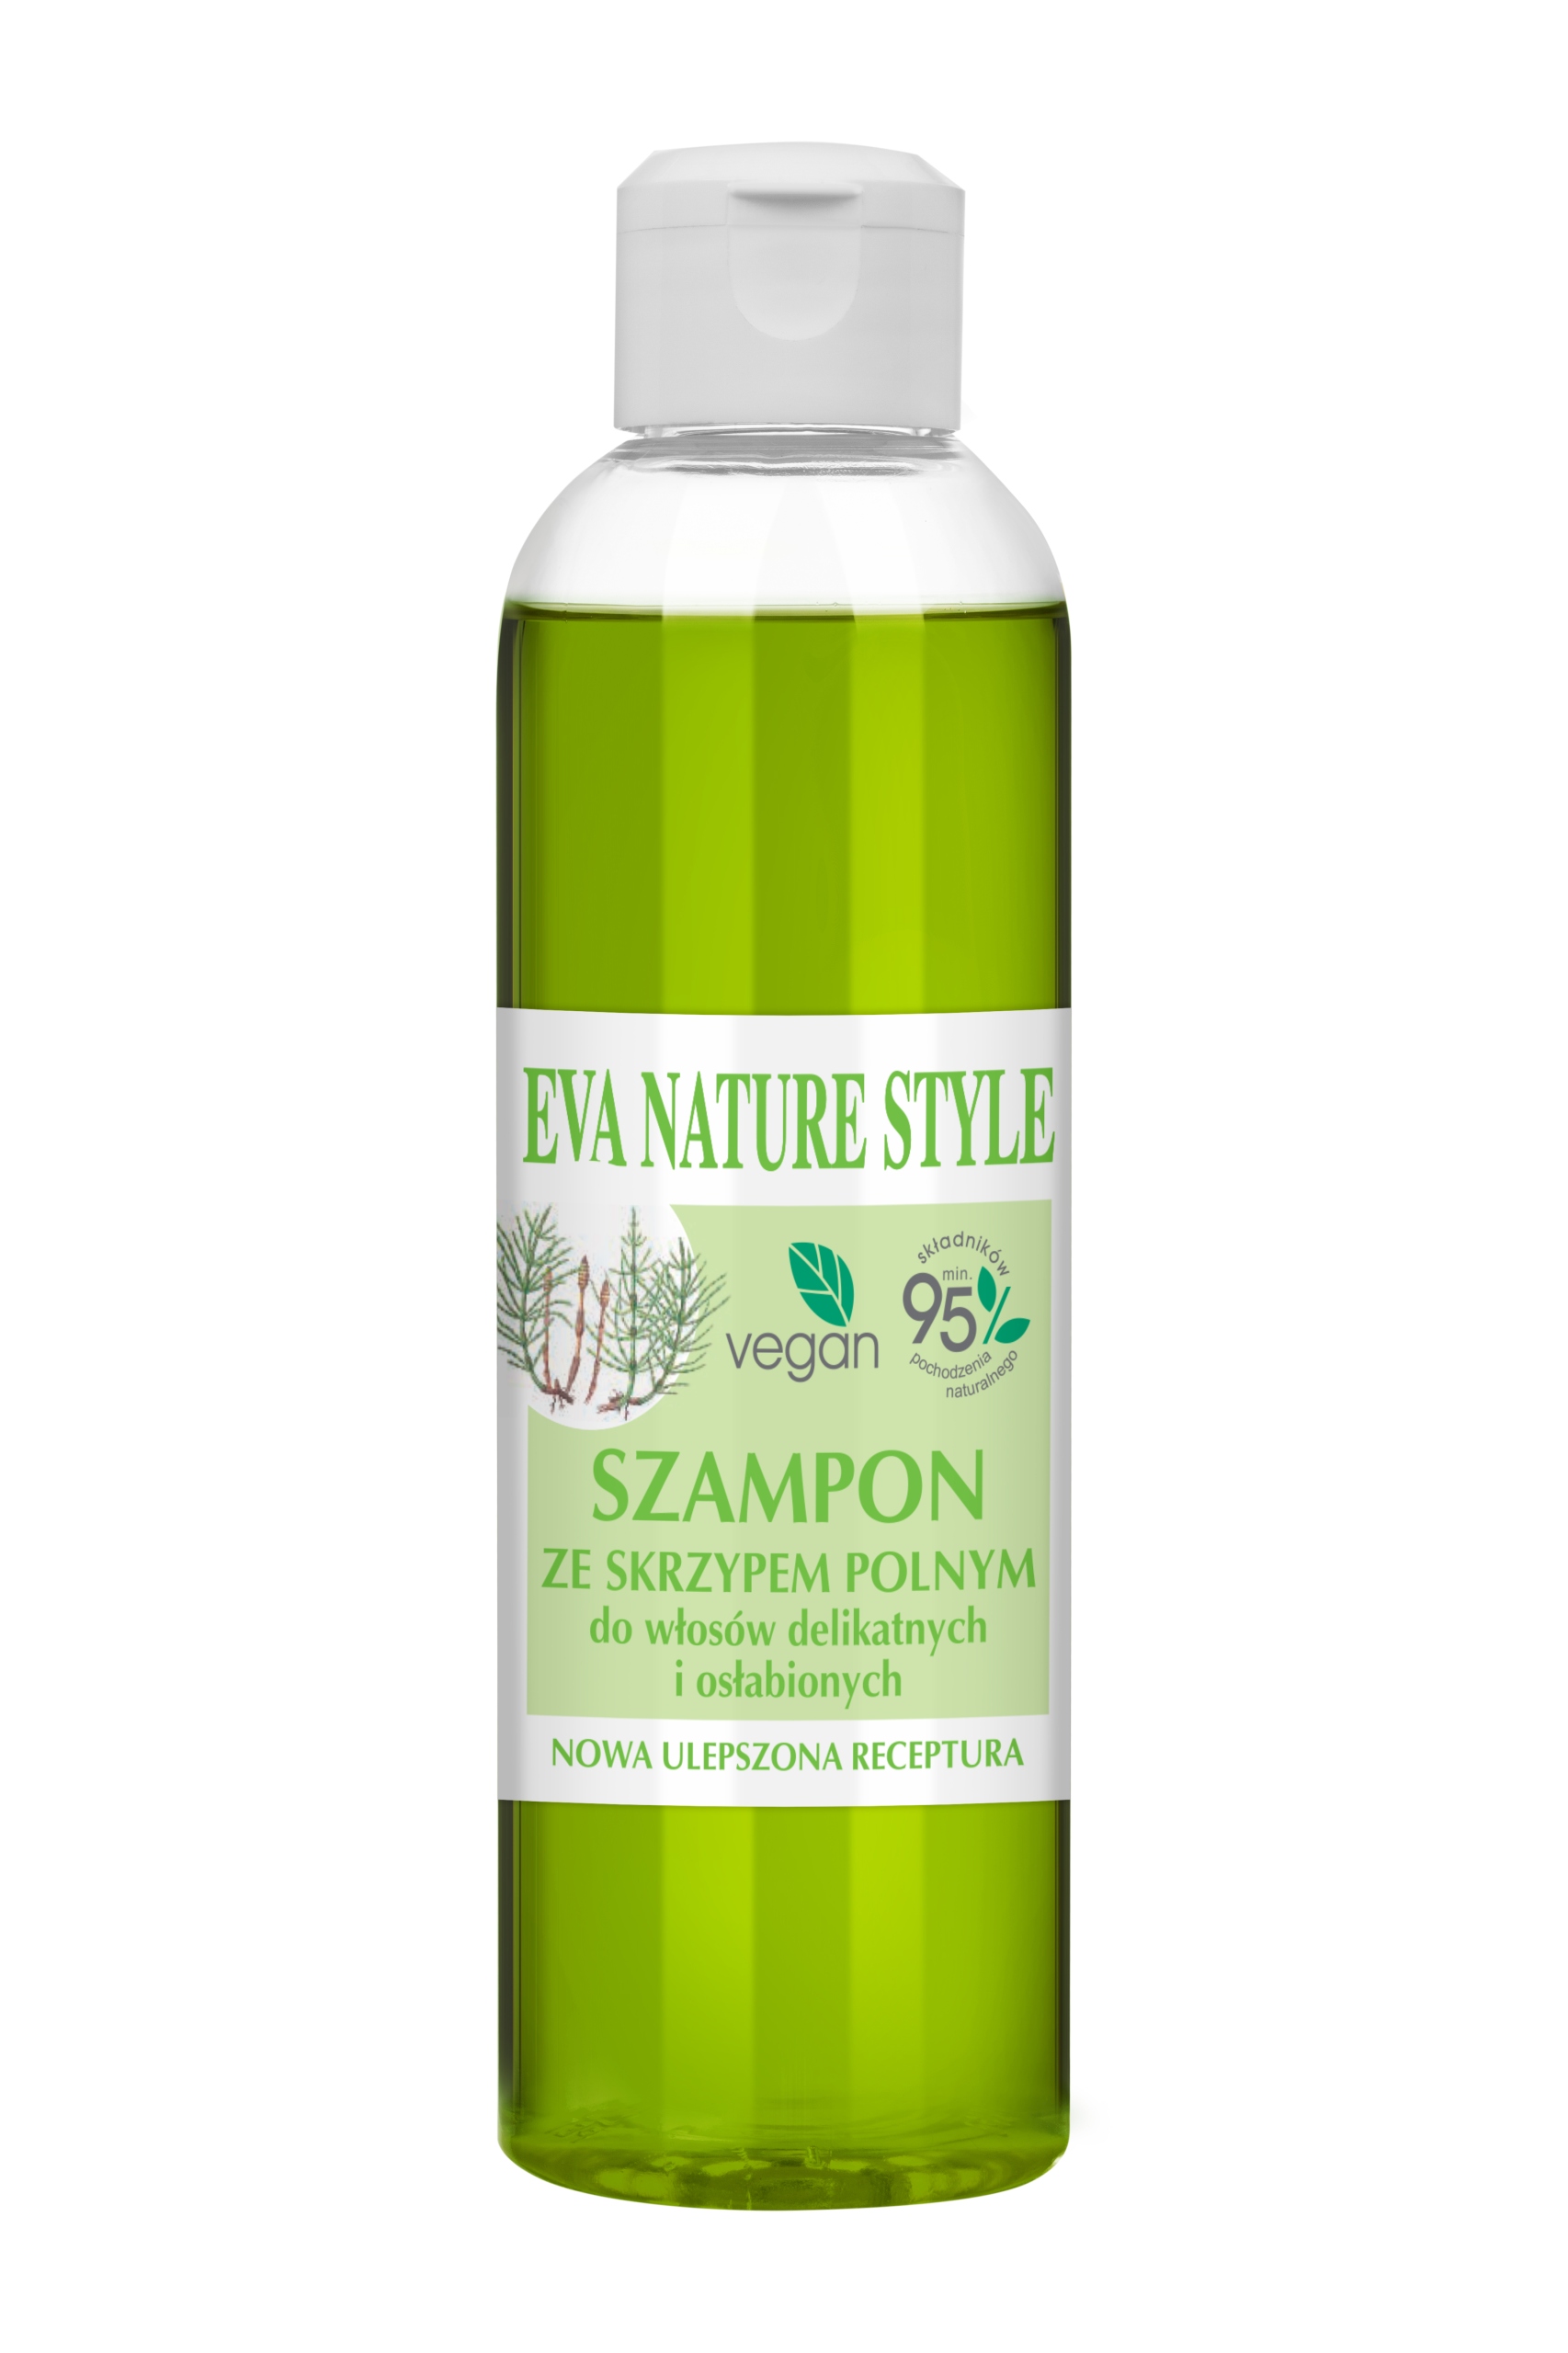 eva nature style szampon